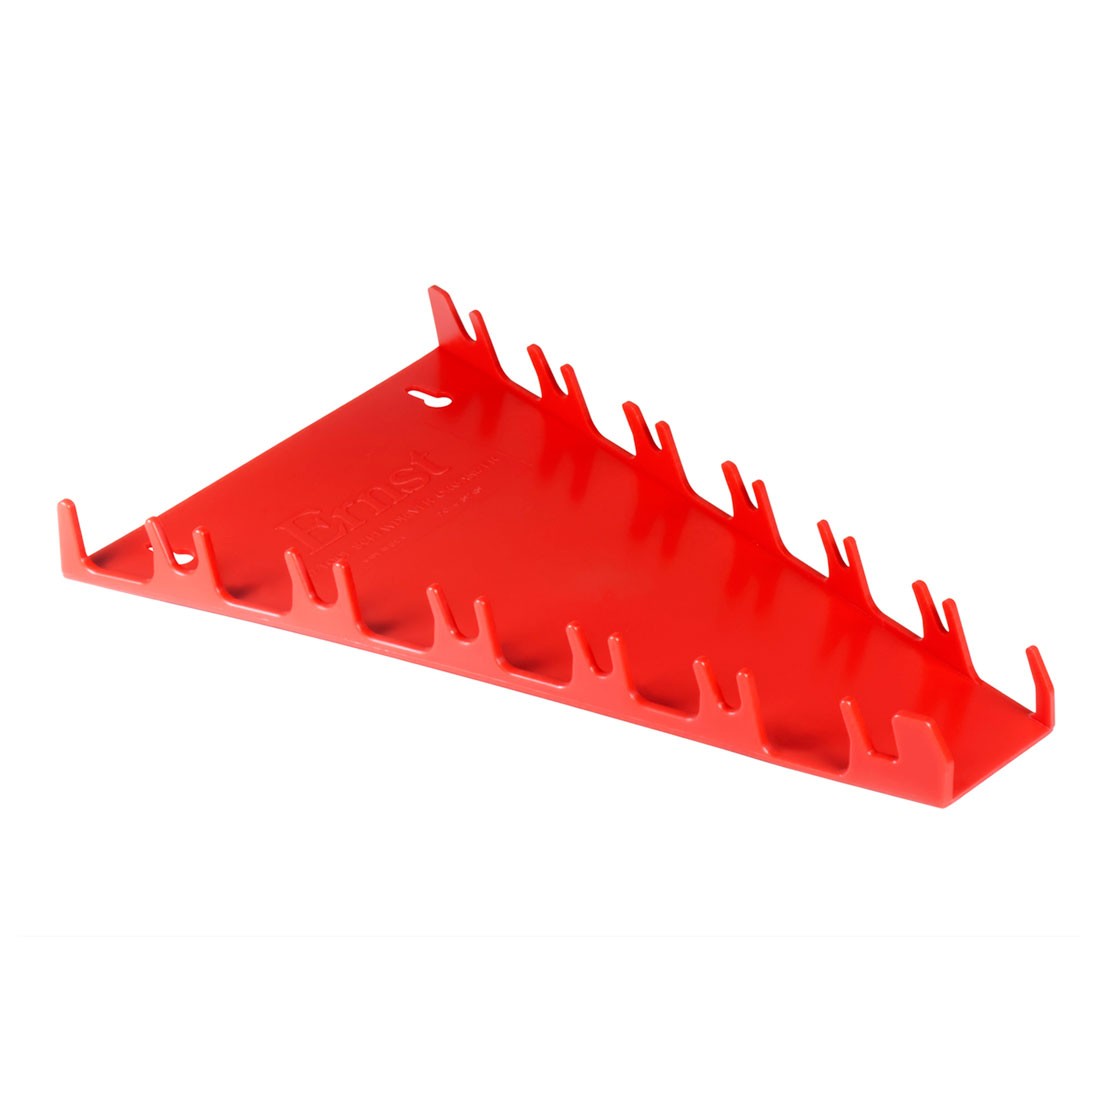 Ernst Manufacturing 10 Compartment Organizer Tray (Red) (11x16) [ERN5010]  - HobbyTown